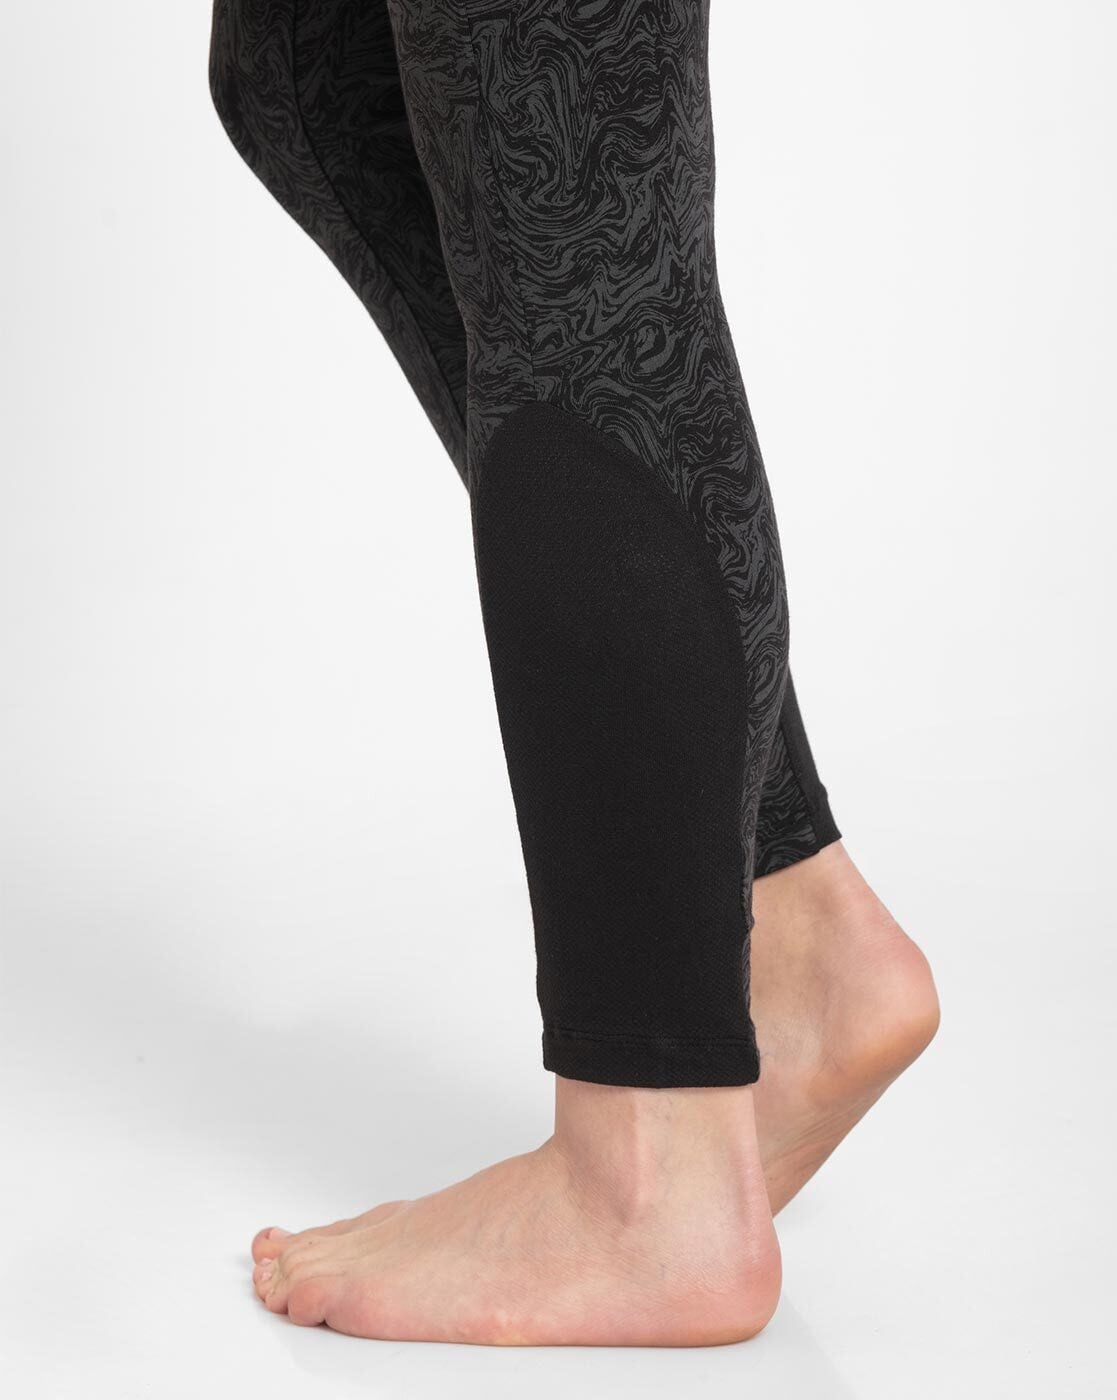 Shop JOCKEY Women's Super Combed Cotton Elastane Stretch Yoga Pants. – INEZY